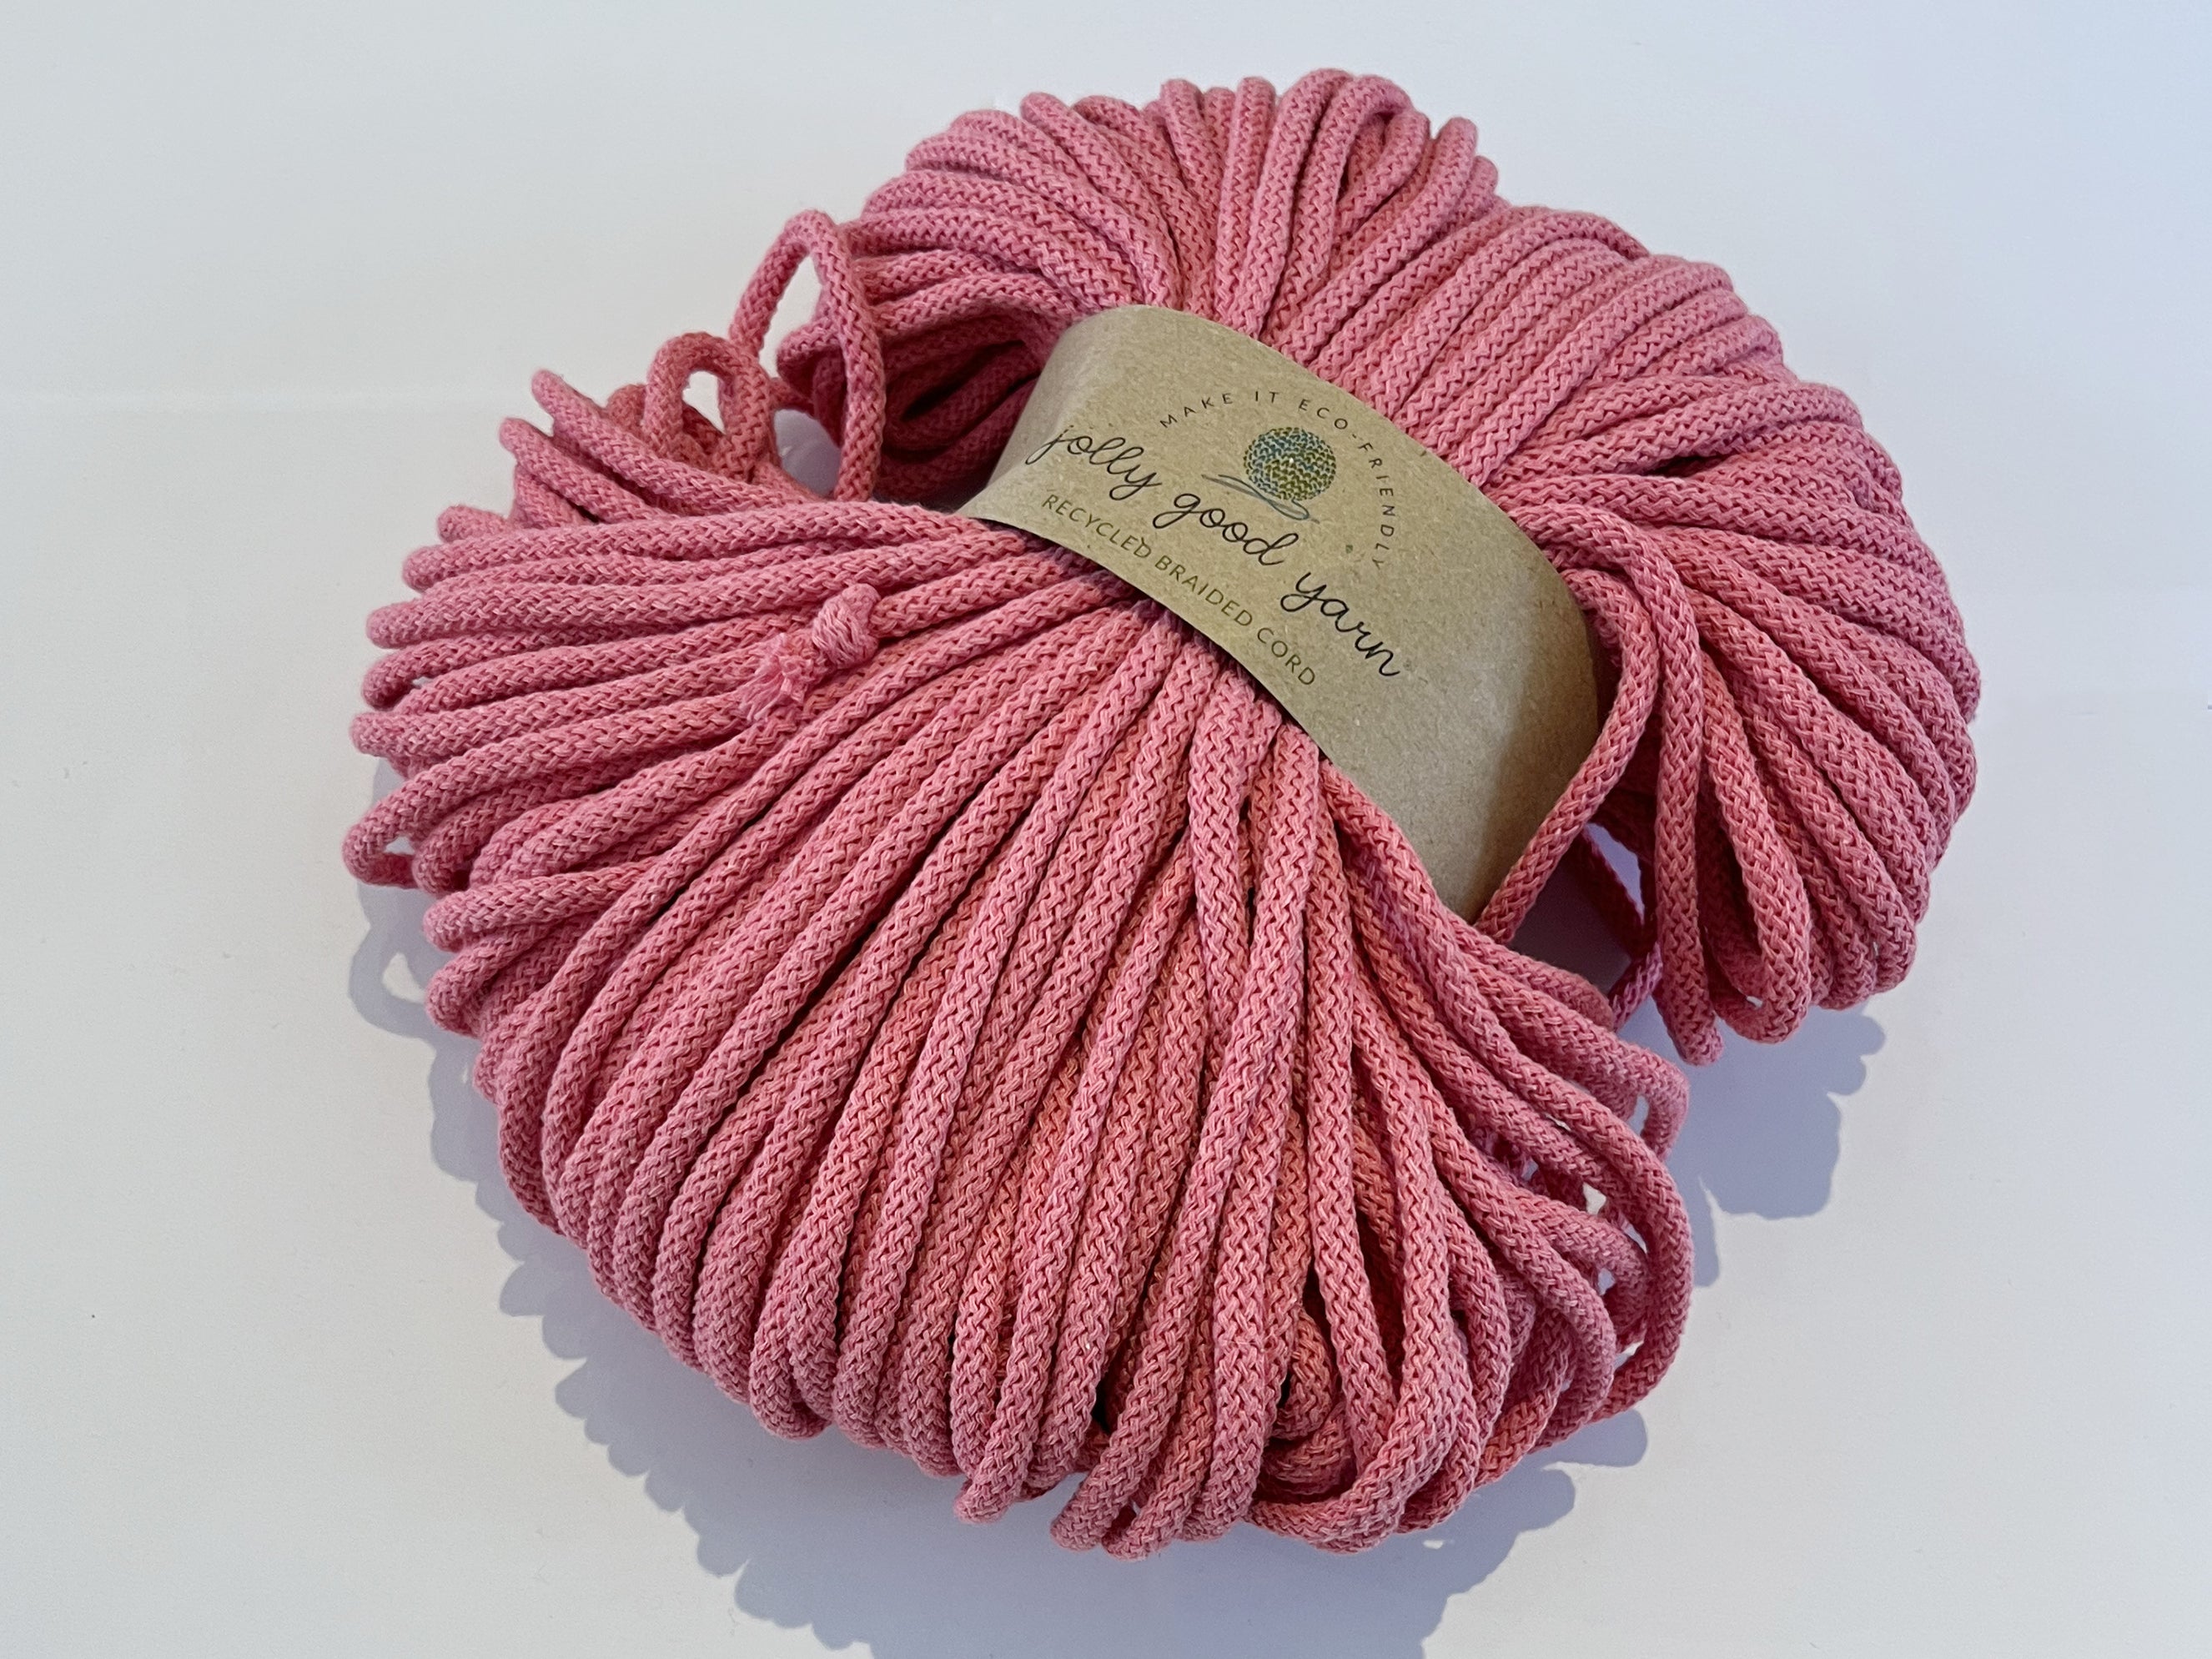 Jolly Good Yarn: Recycled braided cord